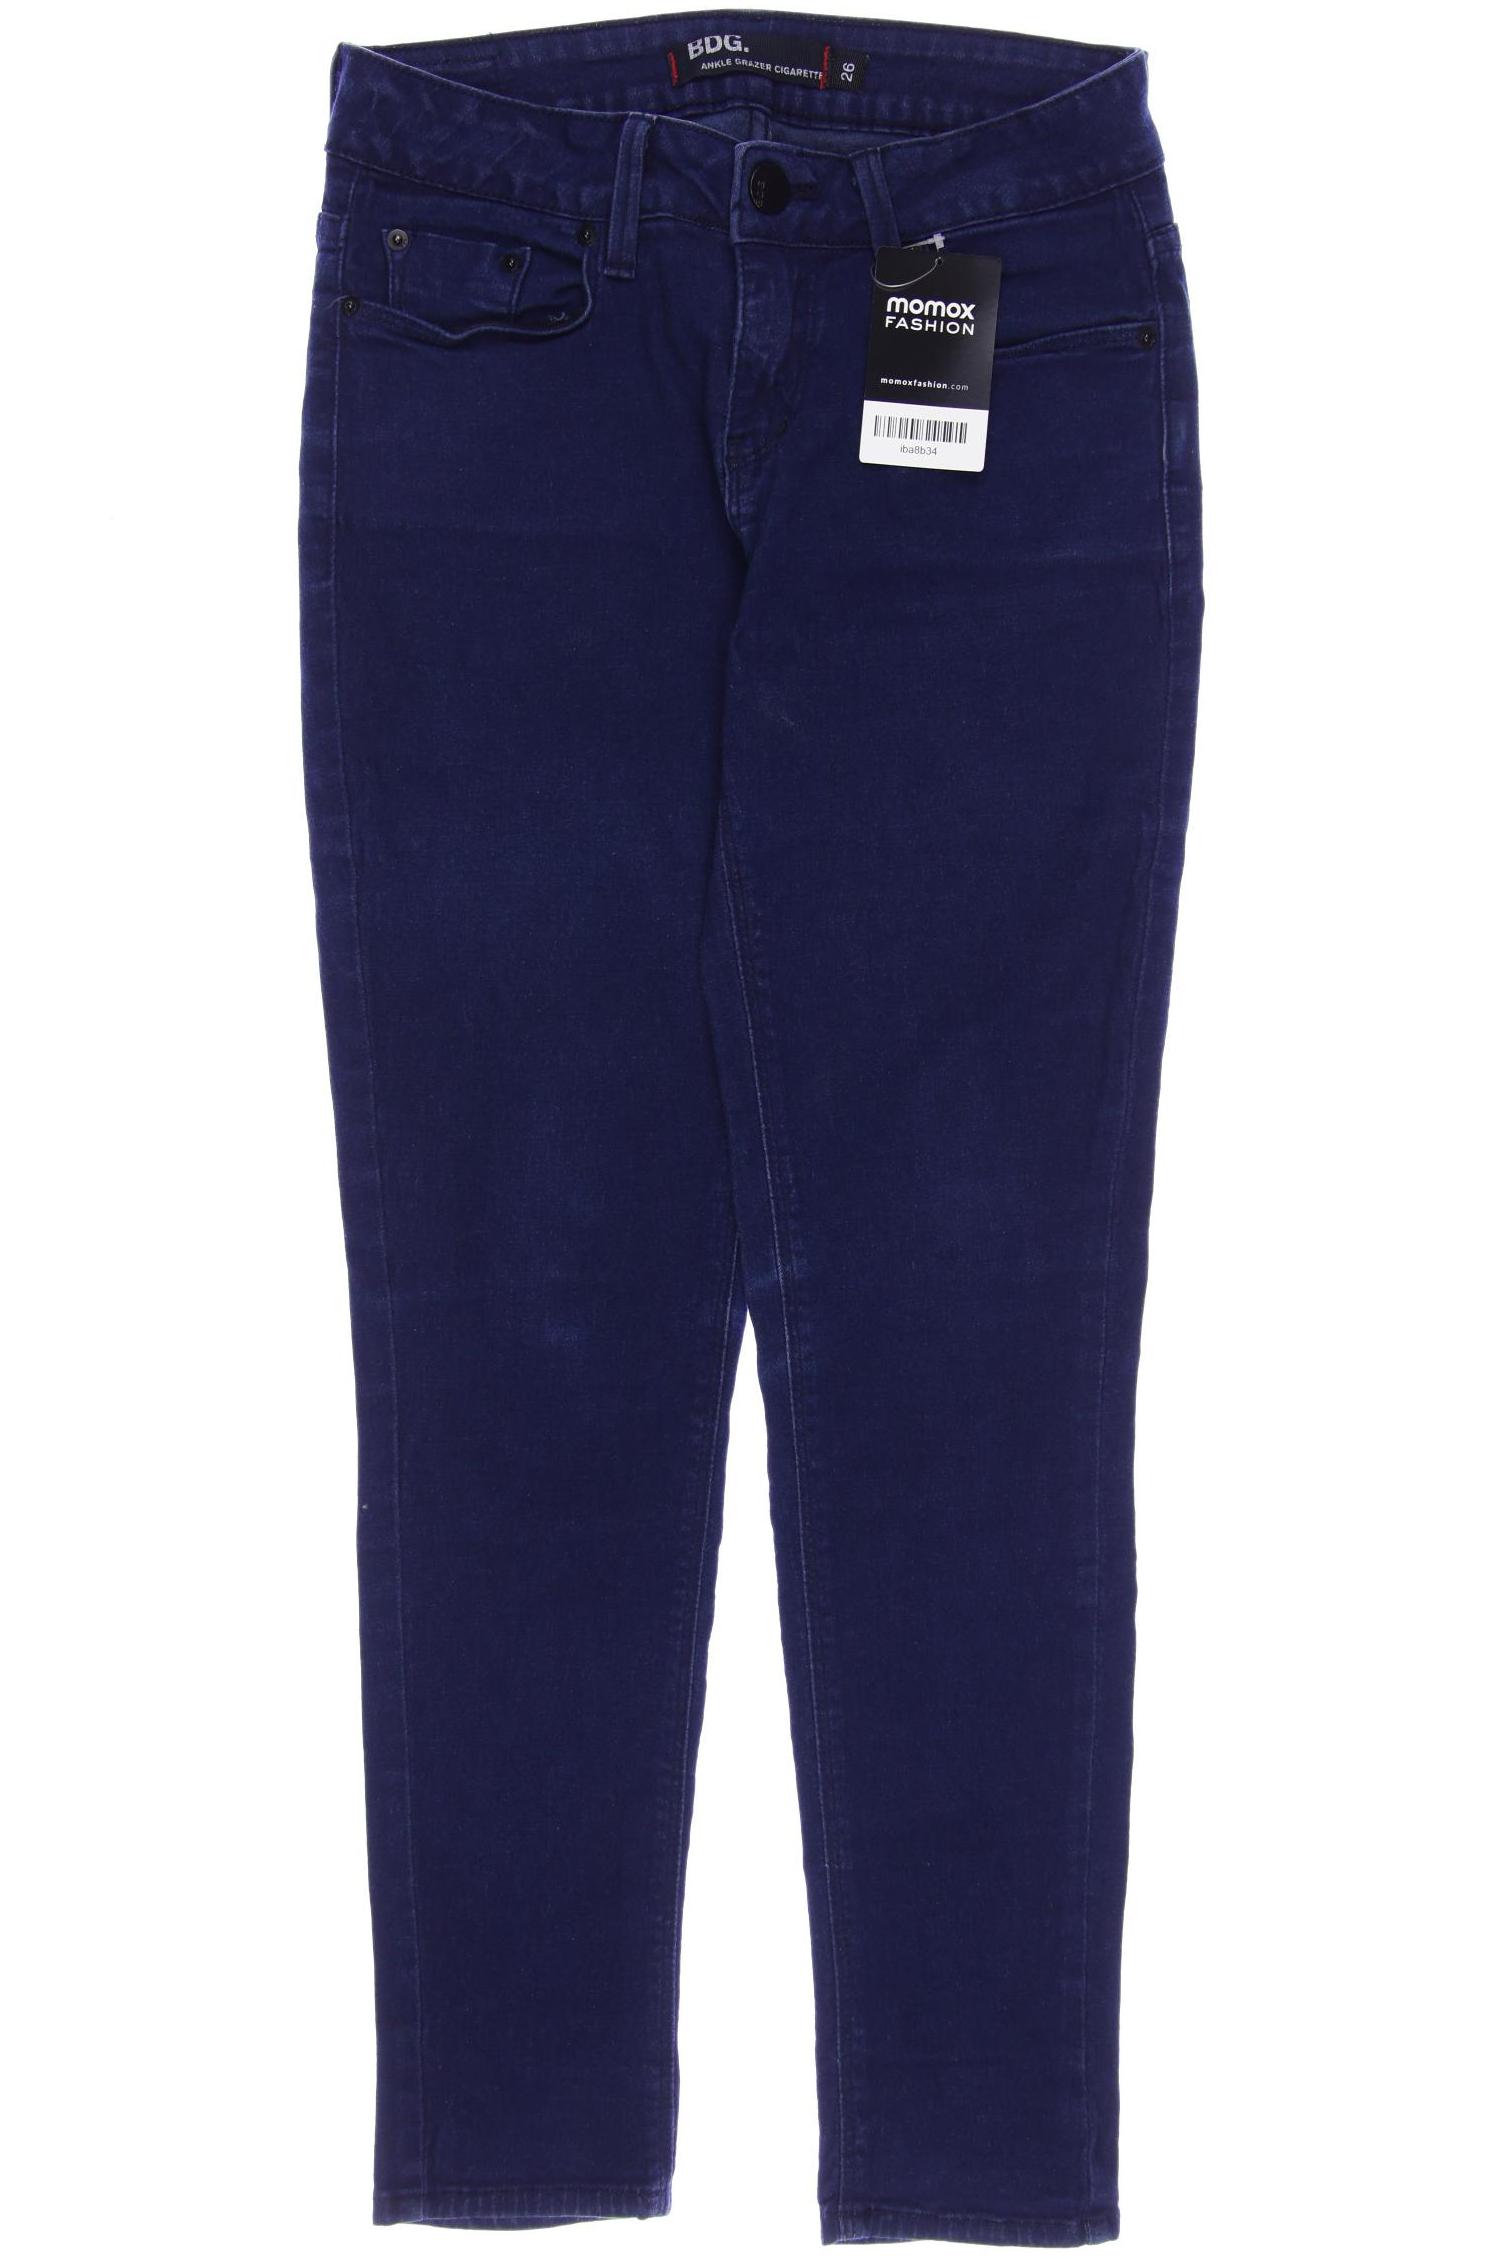 BDG Urban Outfitters Damen Jeans, marineblau von BDG Urban Outfitters